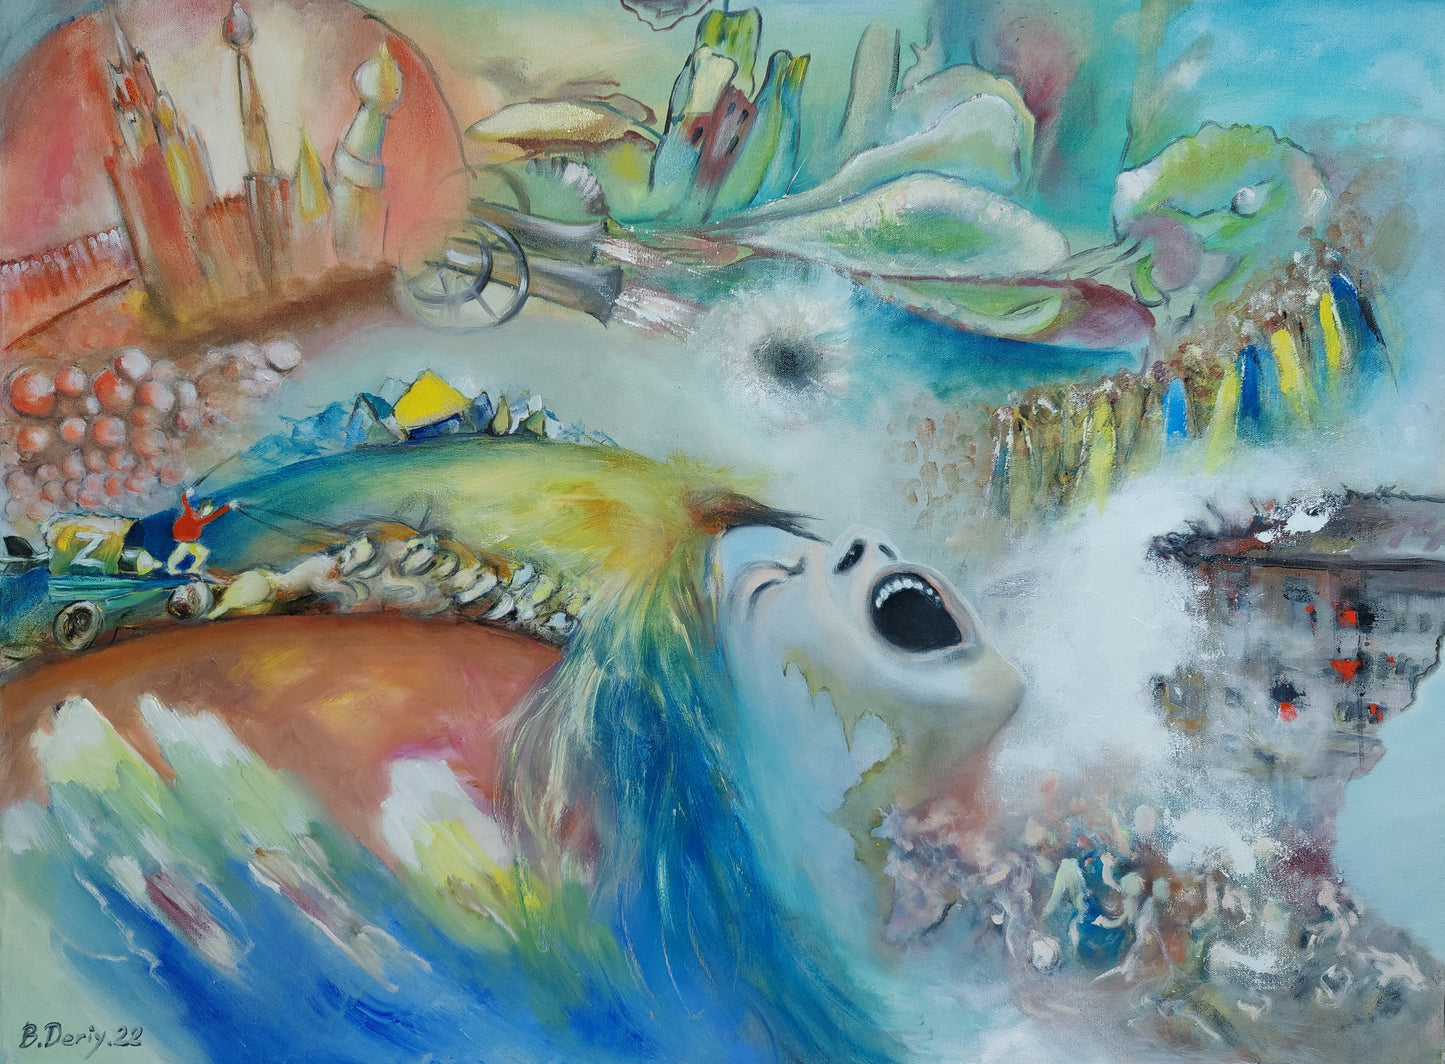 Oil painting "Composition #2022 A la Kandinsky"